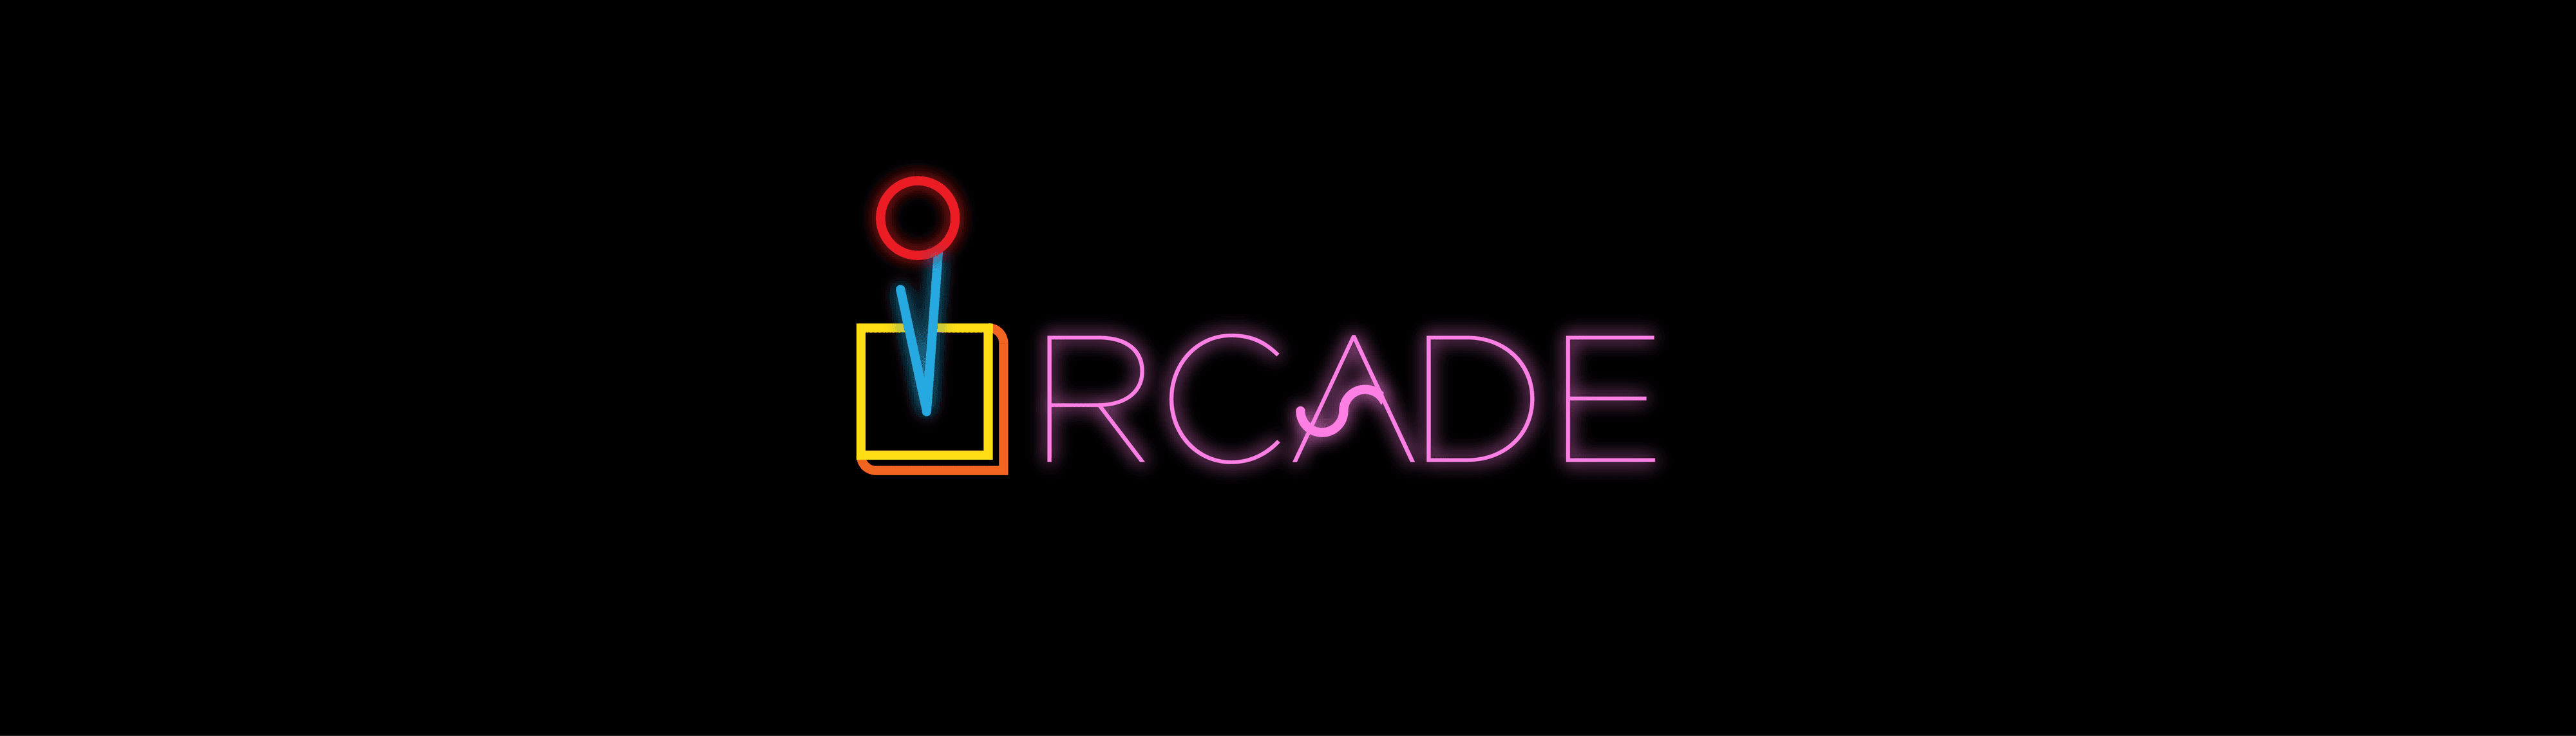 arcade_